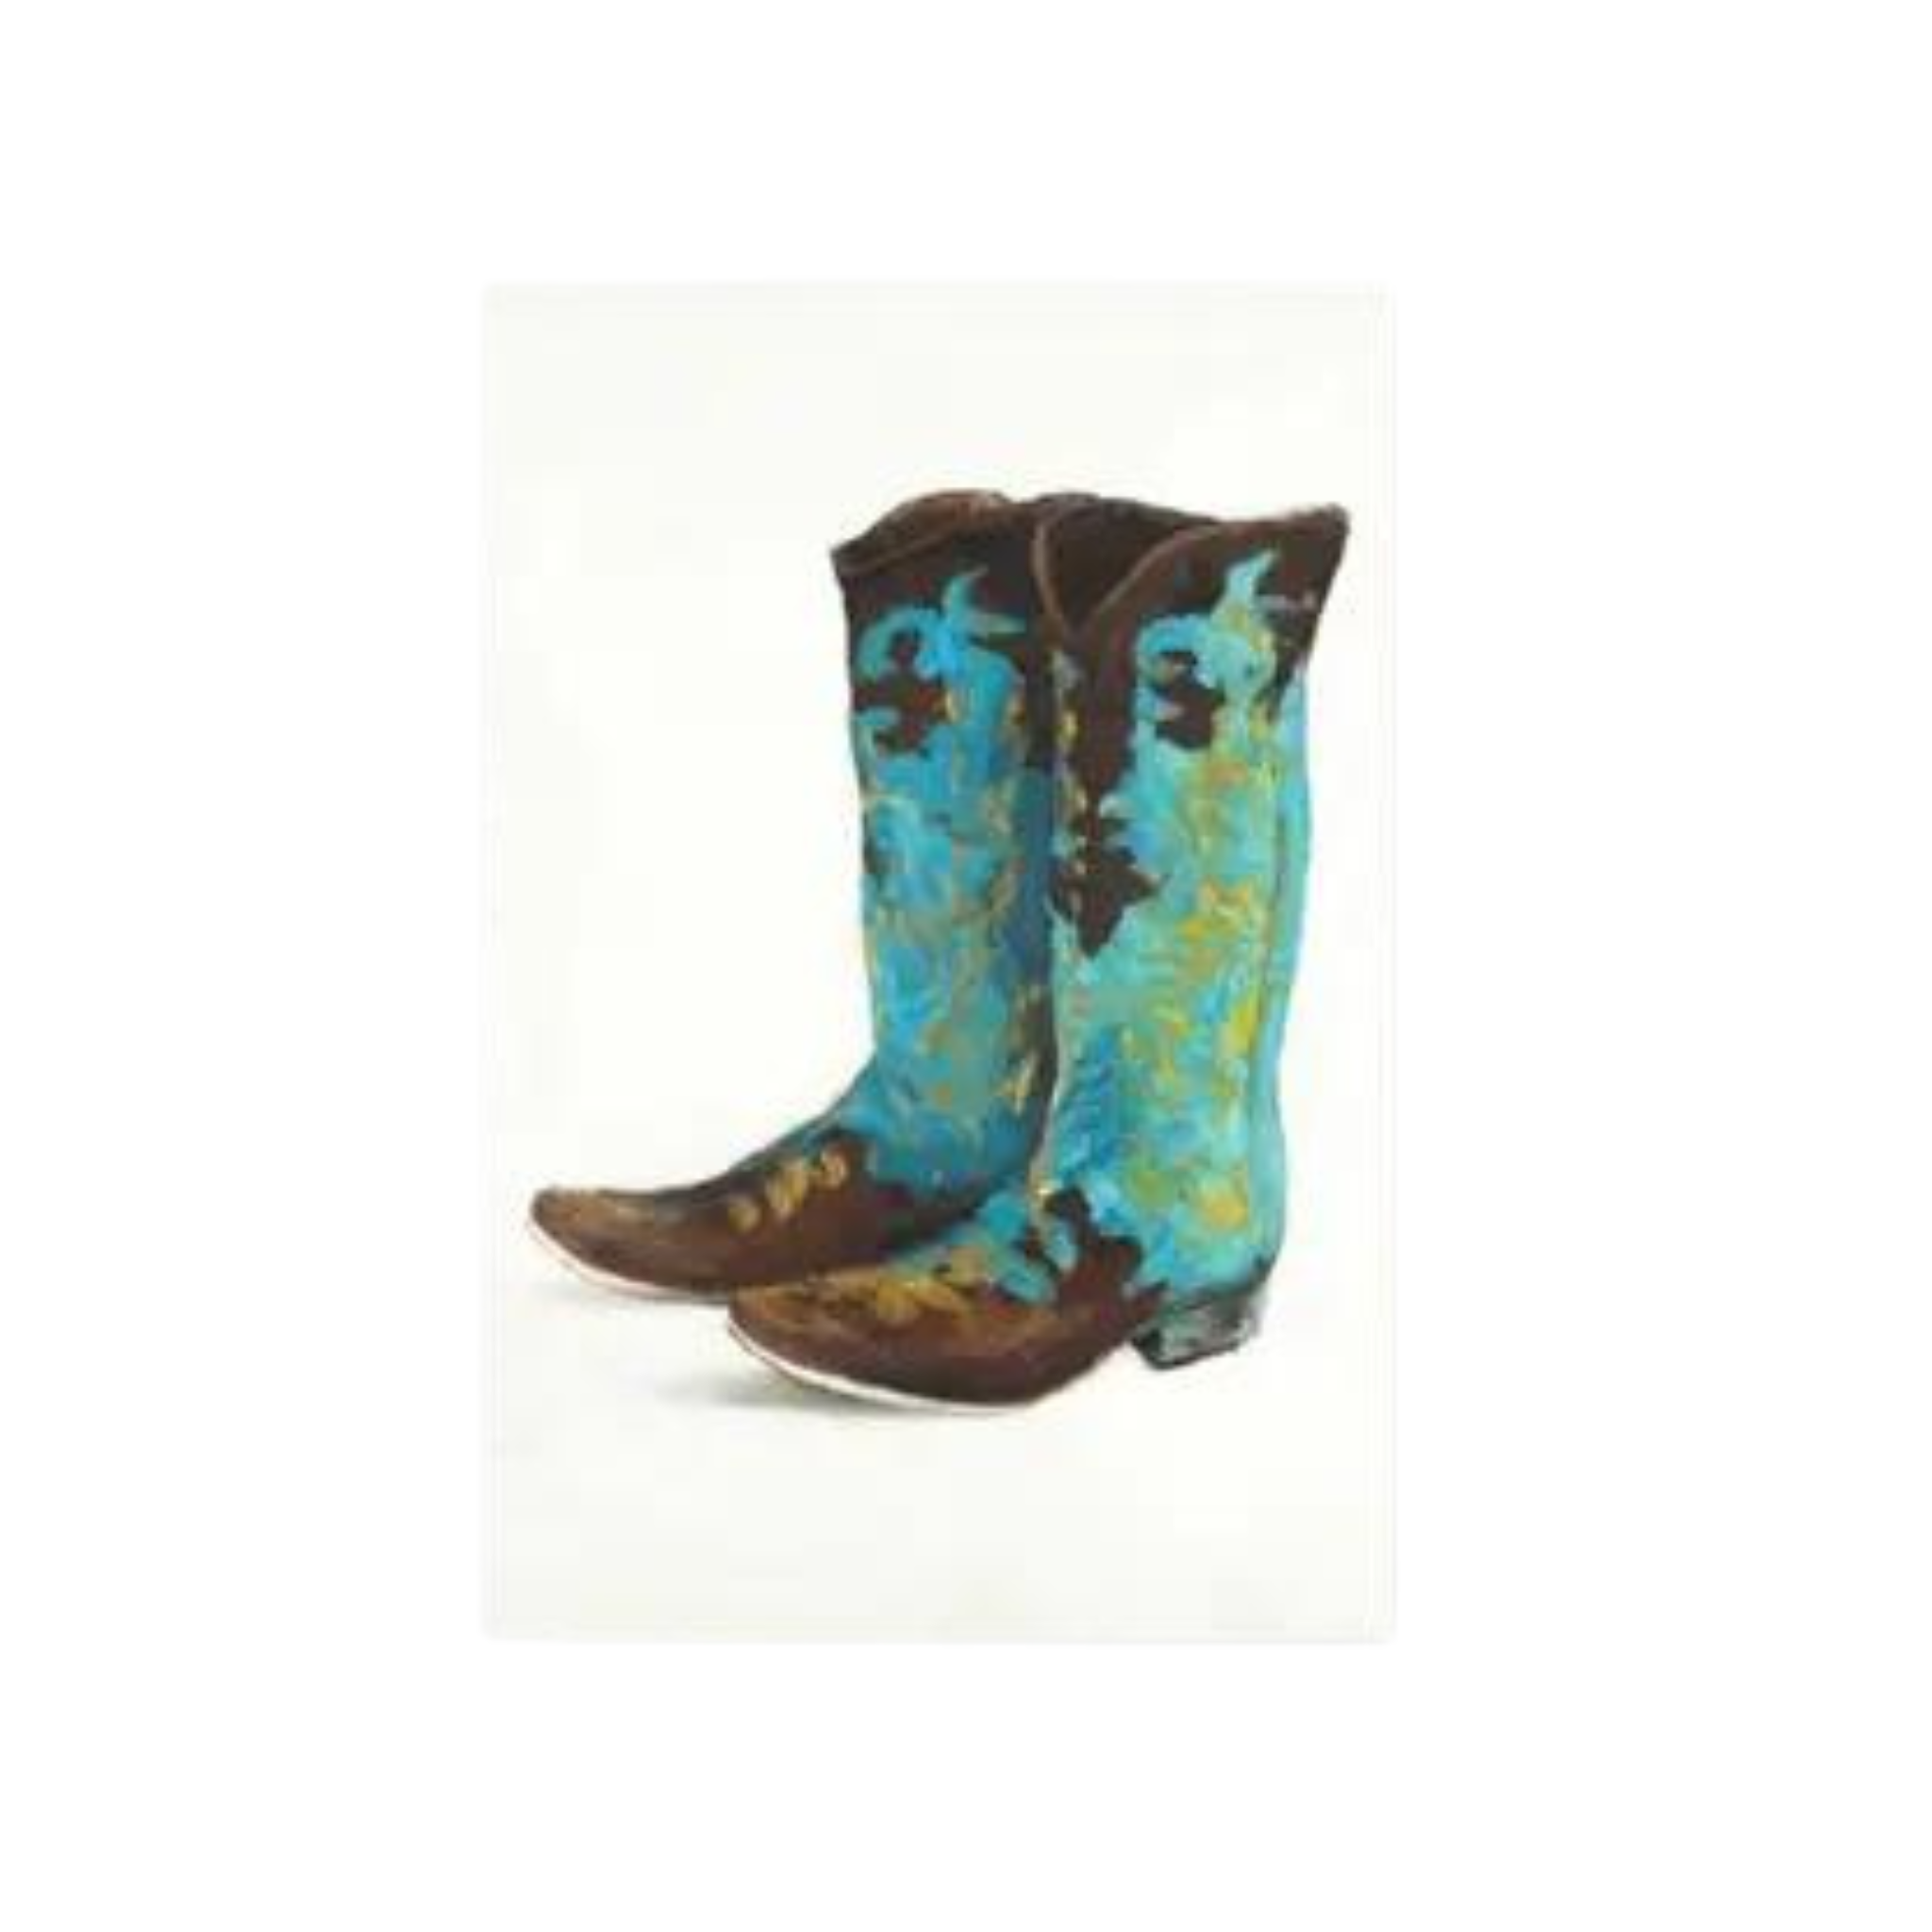 Blue cowboy boots | Fine art print on canvas 24" x 36"